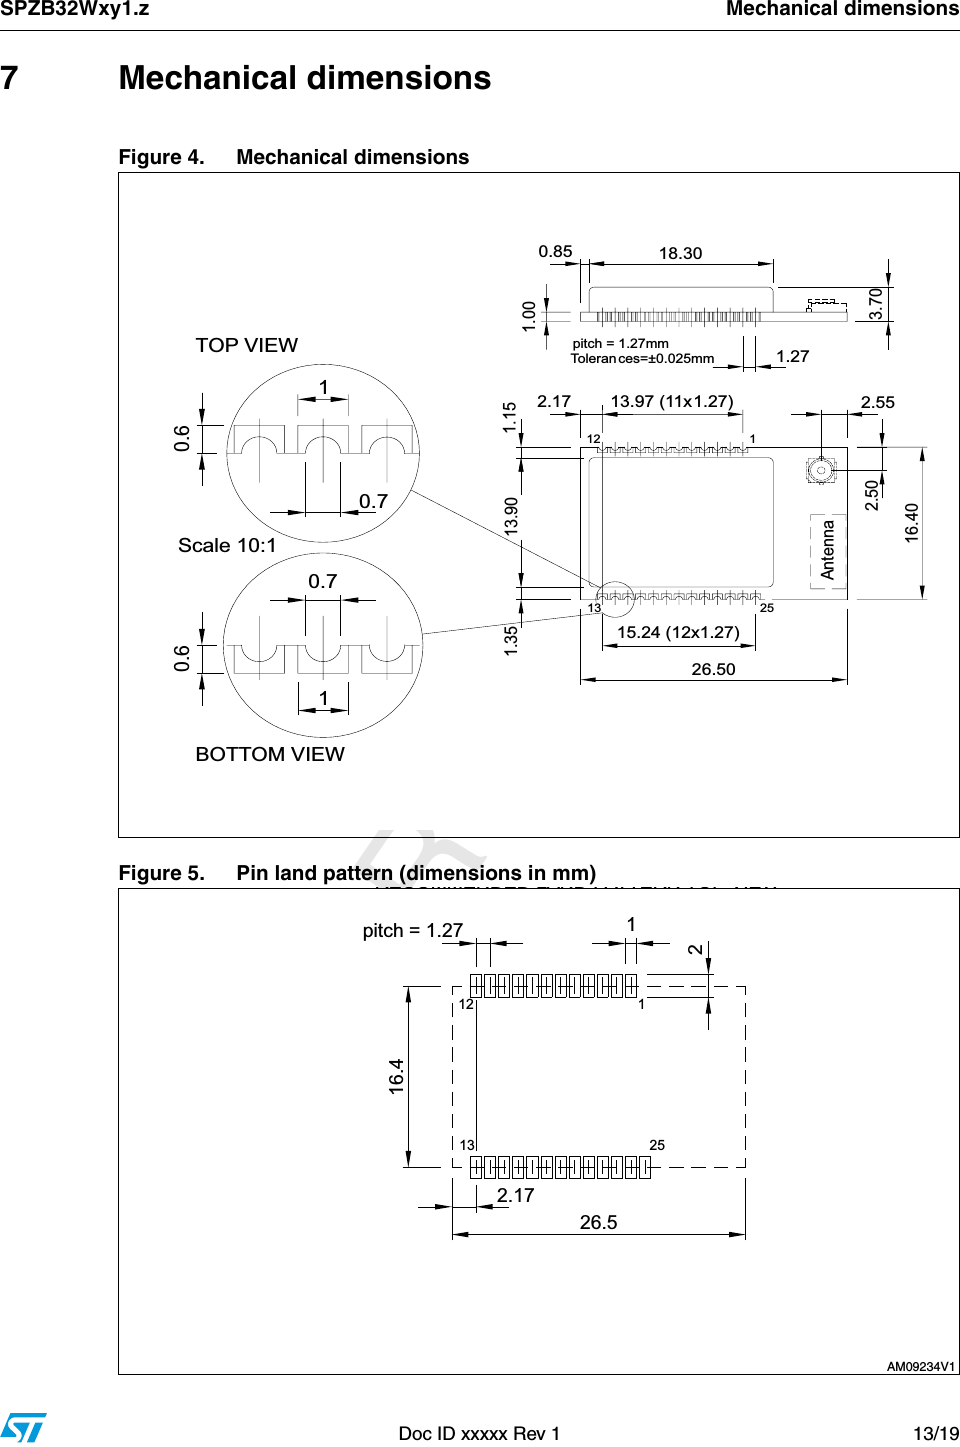 SPZB32Wxy1.z Mechanical dimensionsDoc ID xxxxx Rev 1 13/19         DRAFT7 Mechanical dimensions Figure 4. Mechanical dimensionsFigure 5. Pin land pattern (dimensions in mm)[SLWFK PP7ROHUDQFHV PP%277209,(:6FDOH7239,(:$QWHQQD[5(&amp;200(1&apos;(&apos;/$1&apos;3$77(517239,(:SLWFK !-6